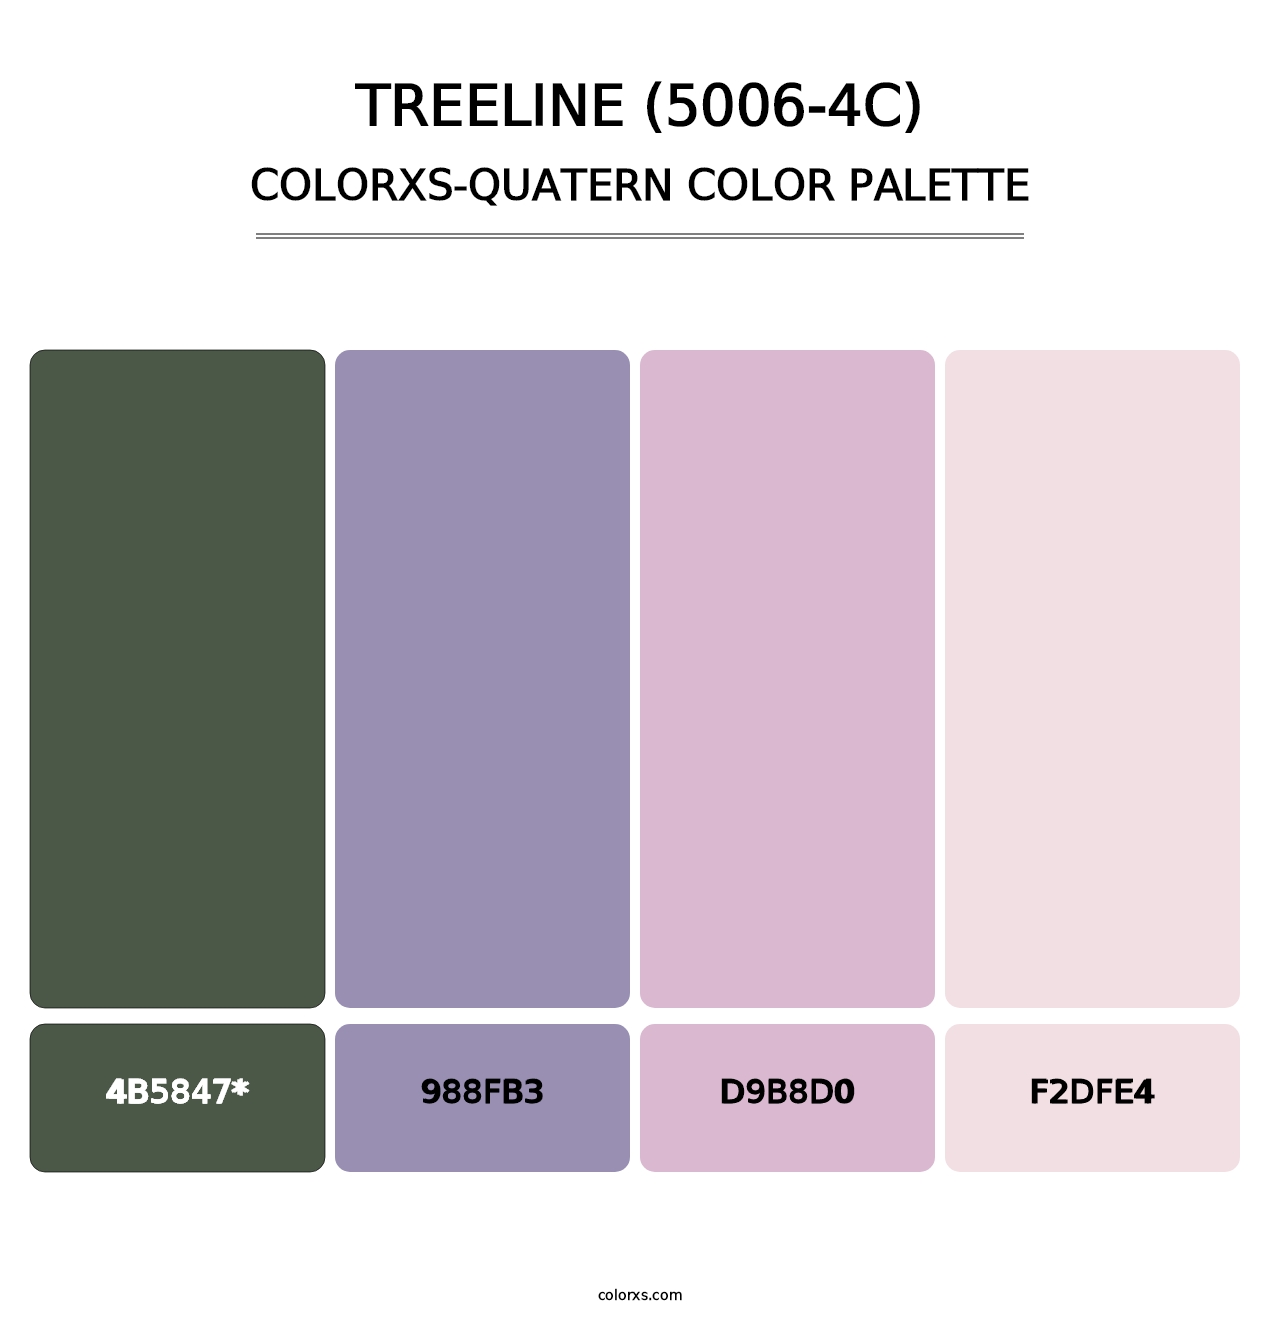 Treeline (5006-4C) - Colorxs Quatern Palette